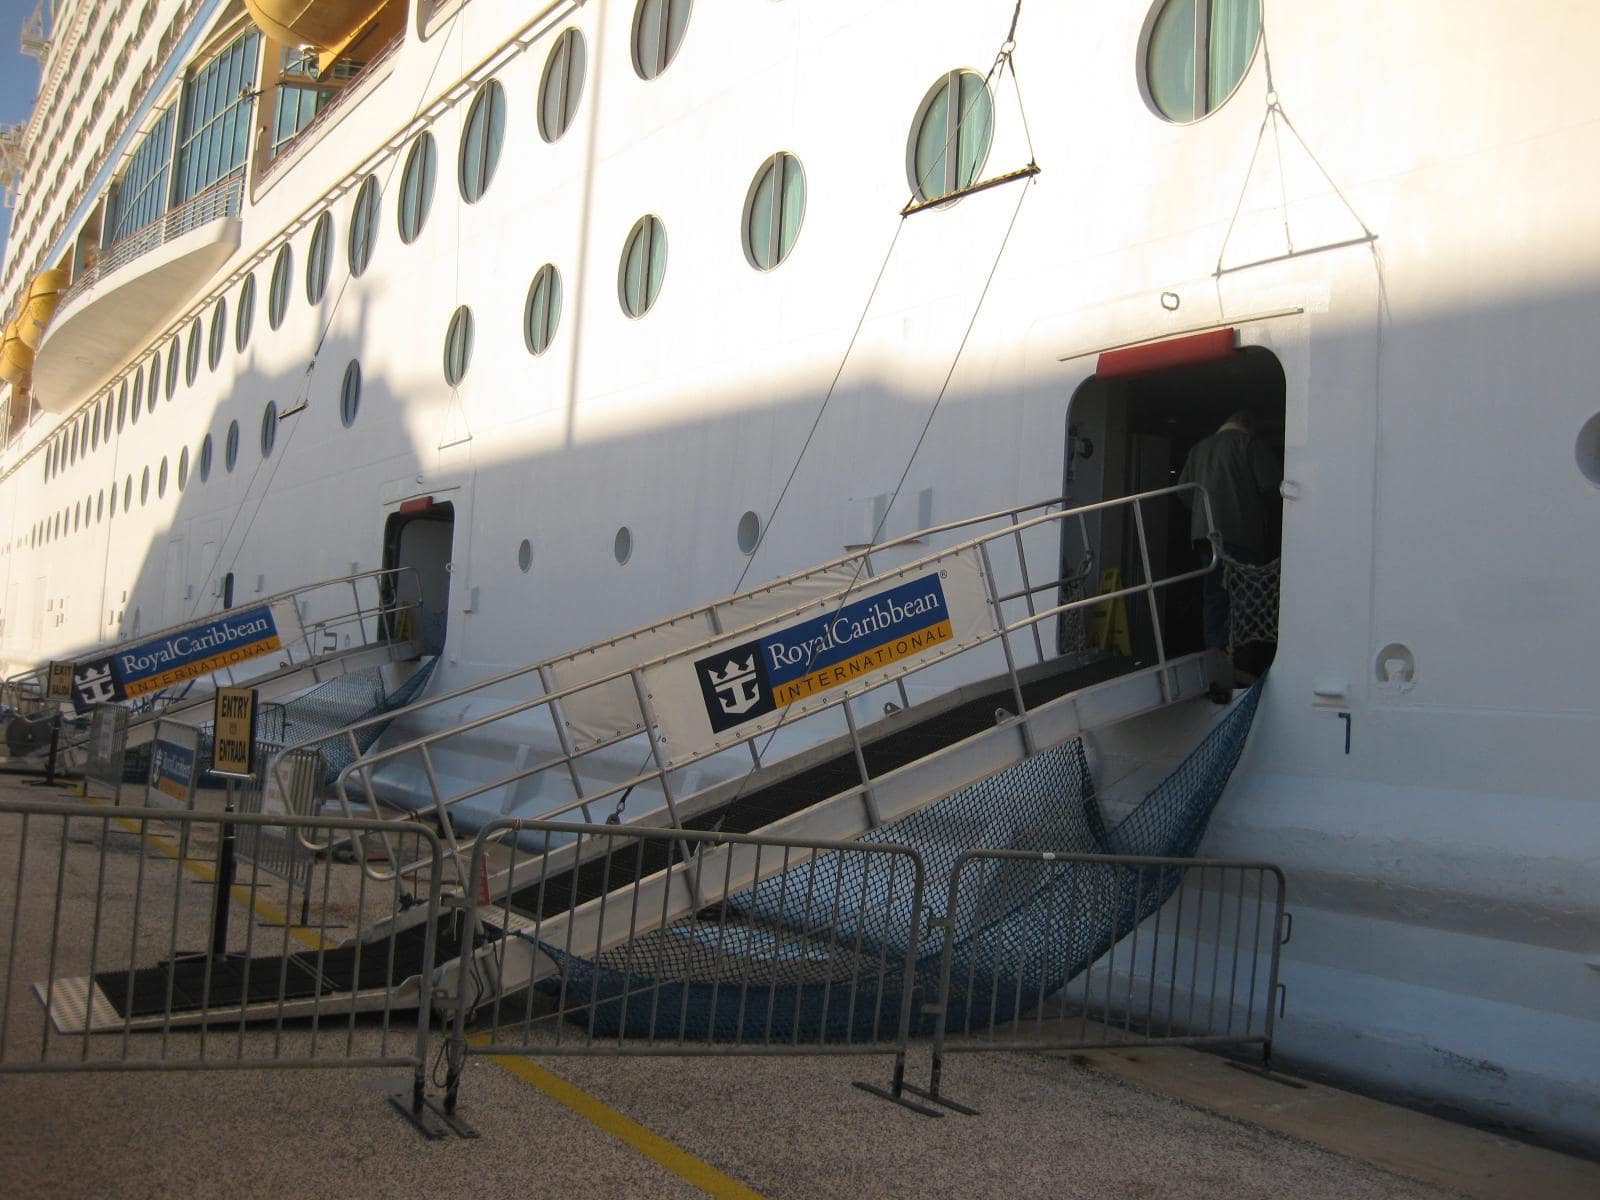 boarding cruise ship royal caribbean